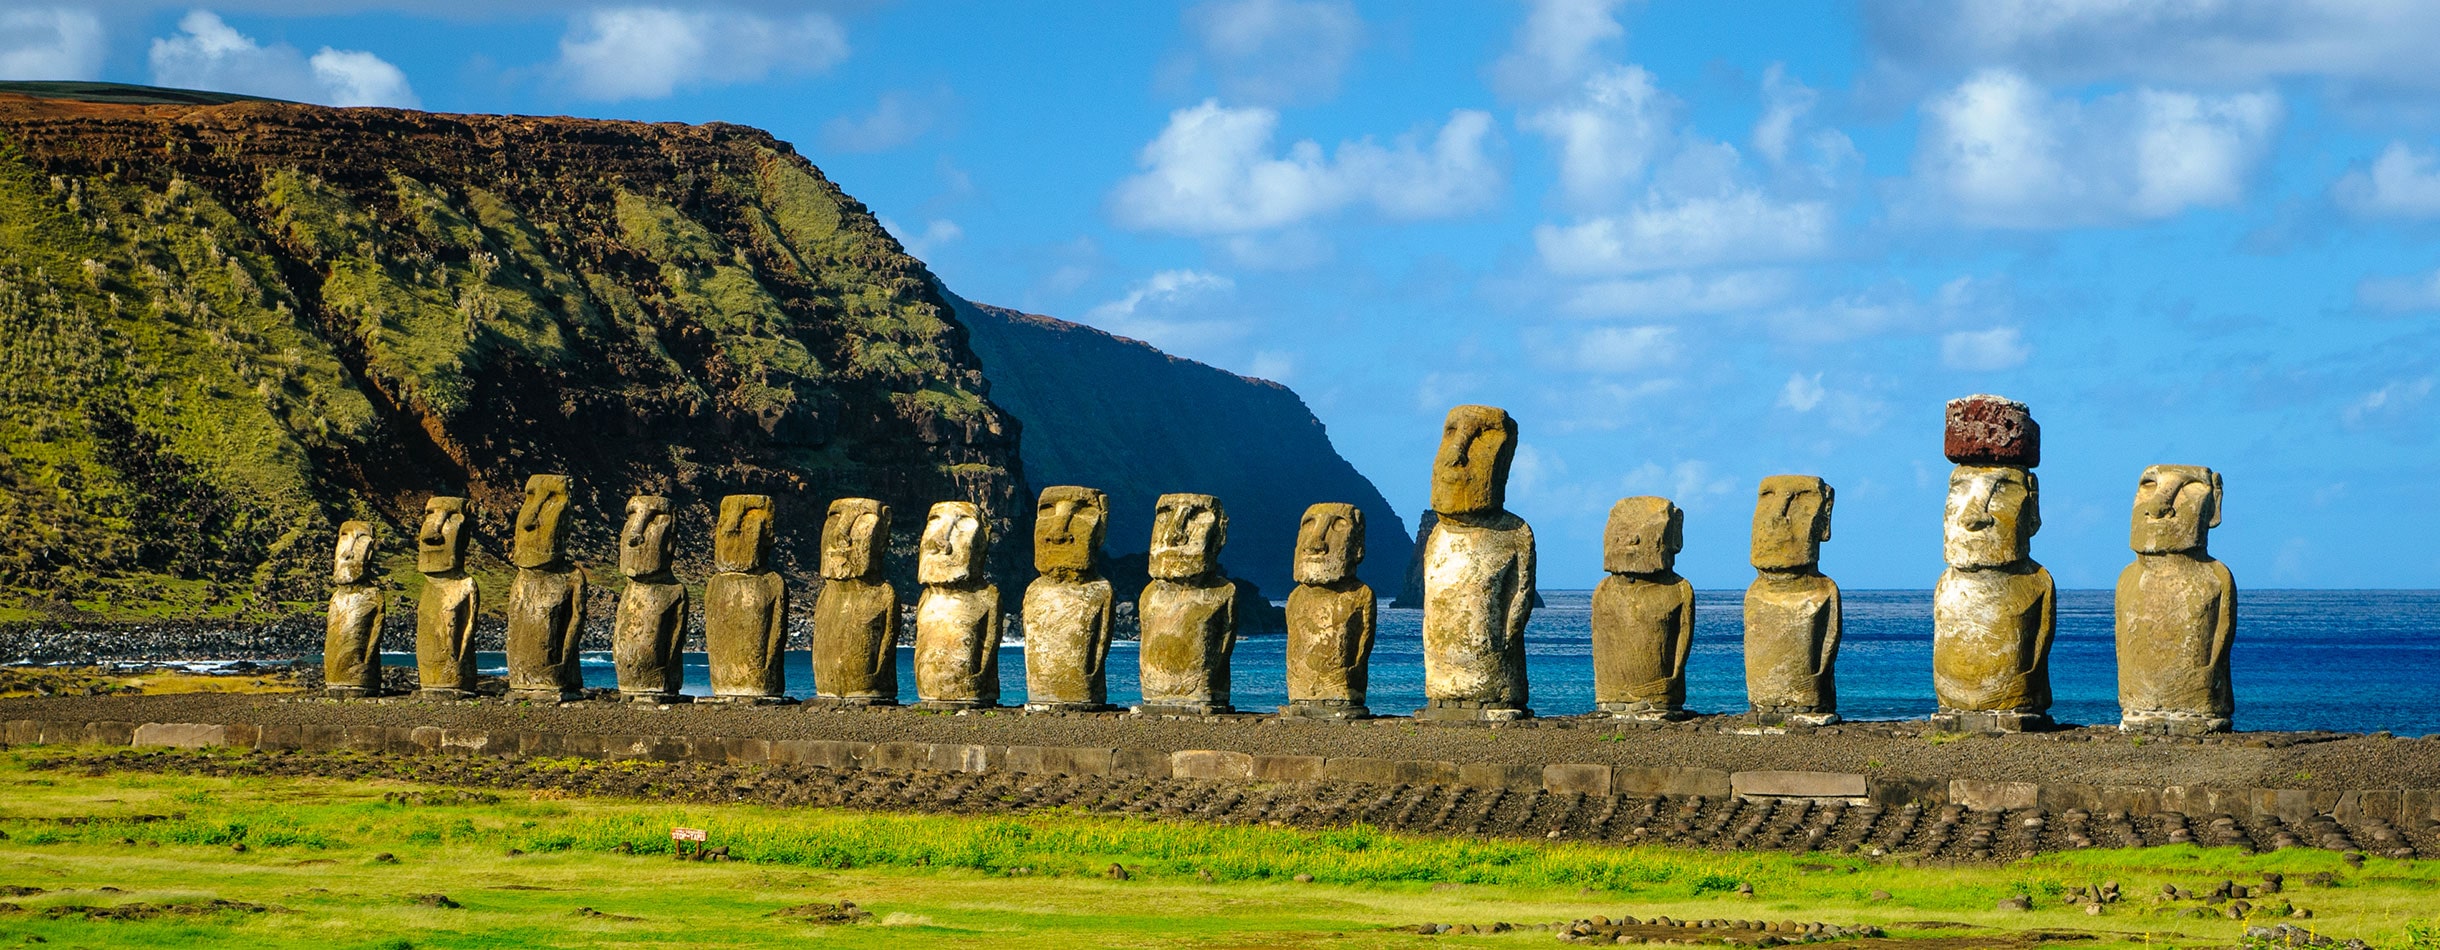 The ancient Moai of Ahu Togariki, on Easter Island